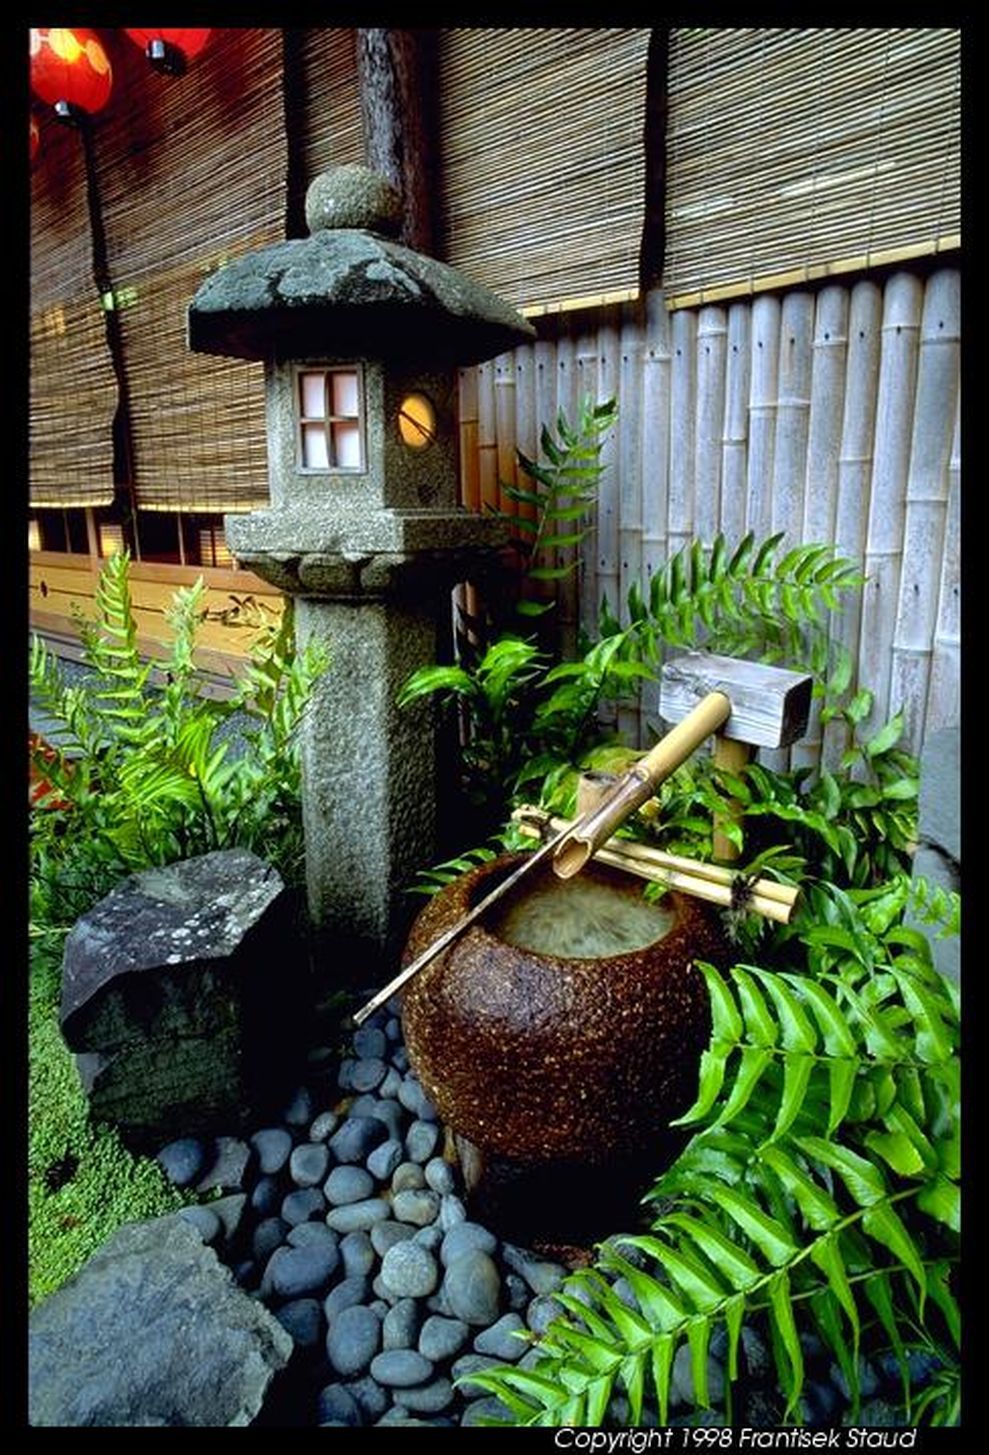 Peaceful And Calmness Japanese Courtyard Decor Ideas